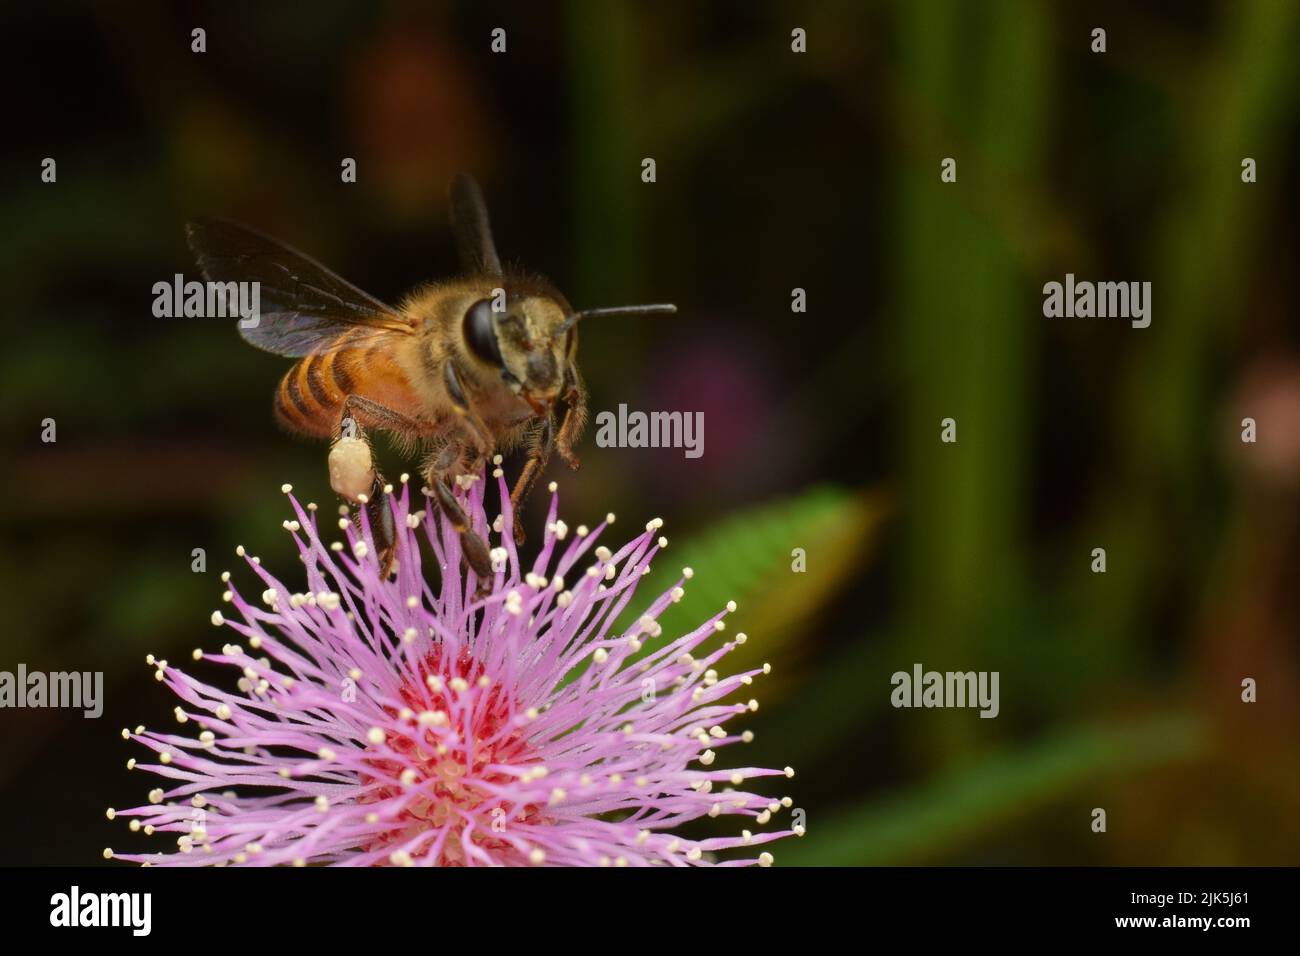 Close up photo of honeybee visiting shameplant flower head. Stock Photo